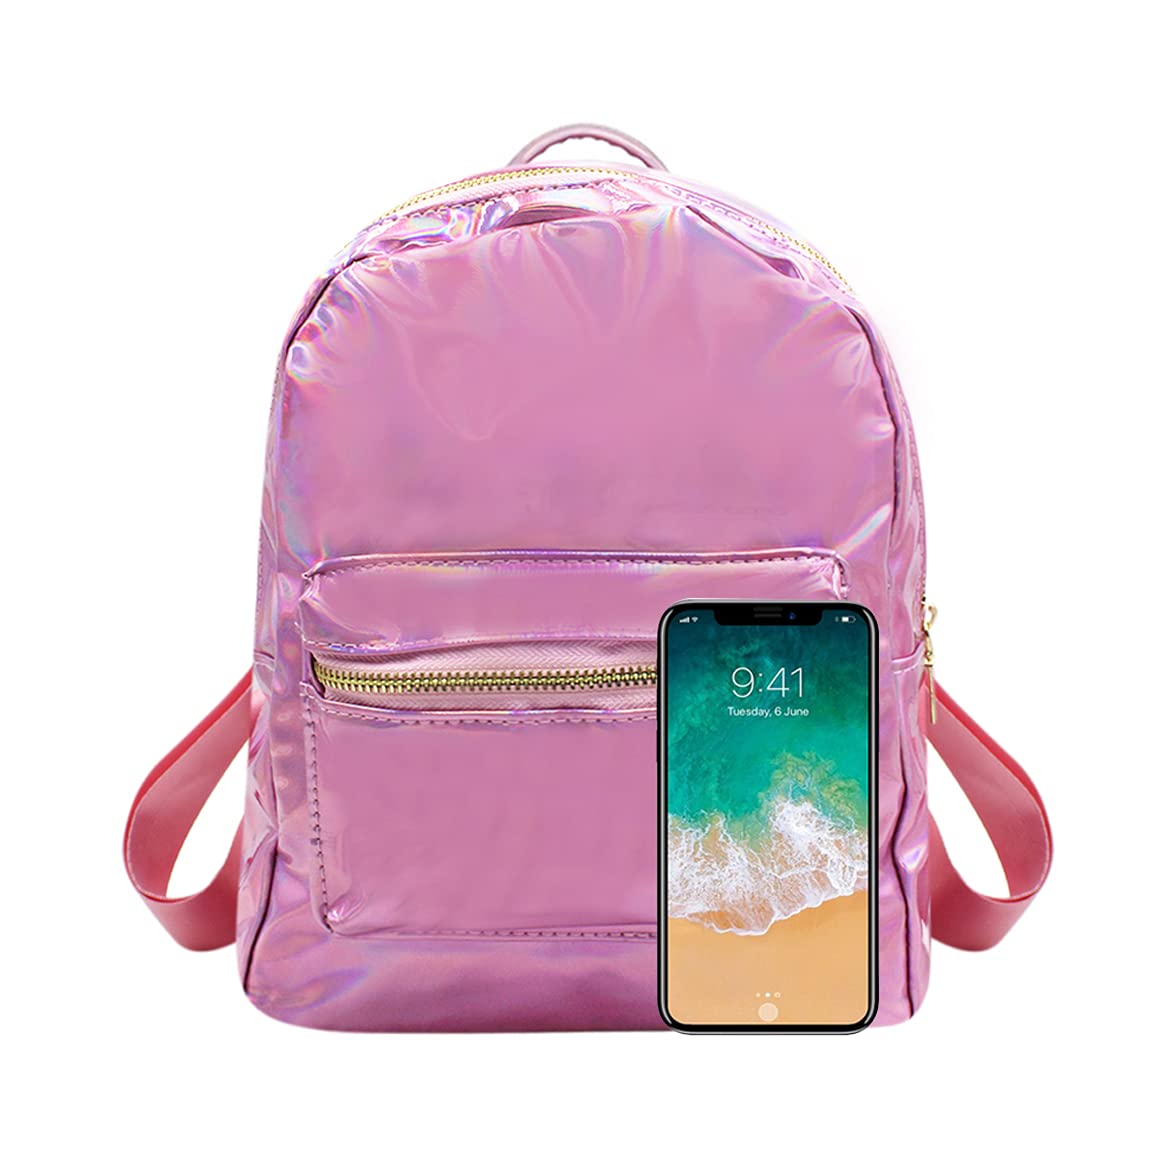 MOSSTYUS Small Holographic Rainbow Shoulder Bag Metallic Satchel Shiny Travel Daypack for Women Lady